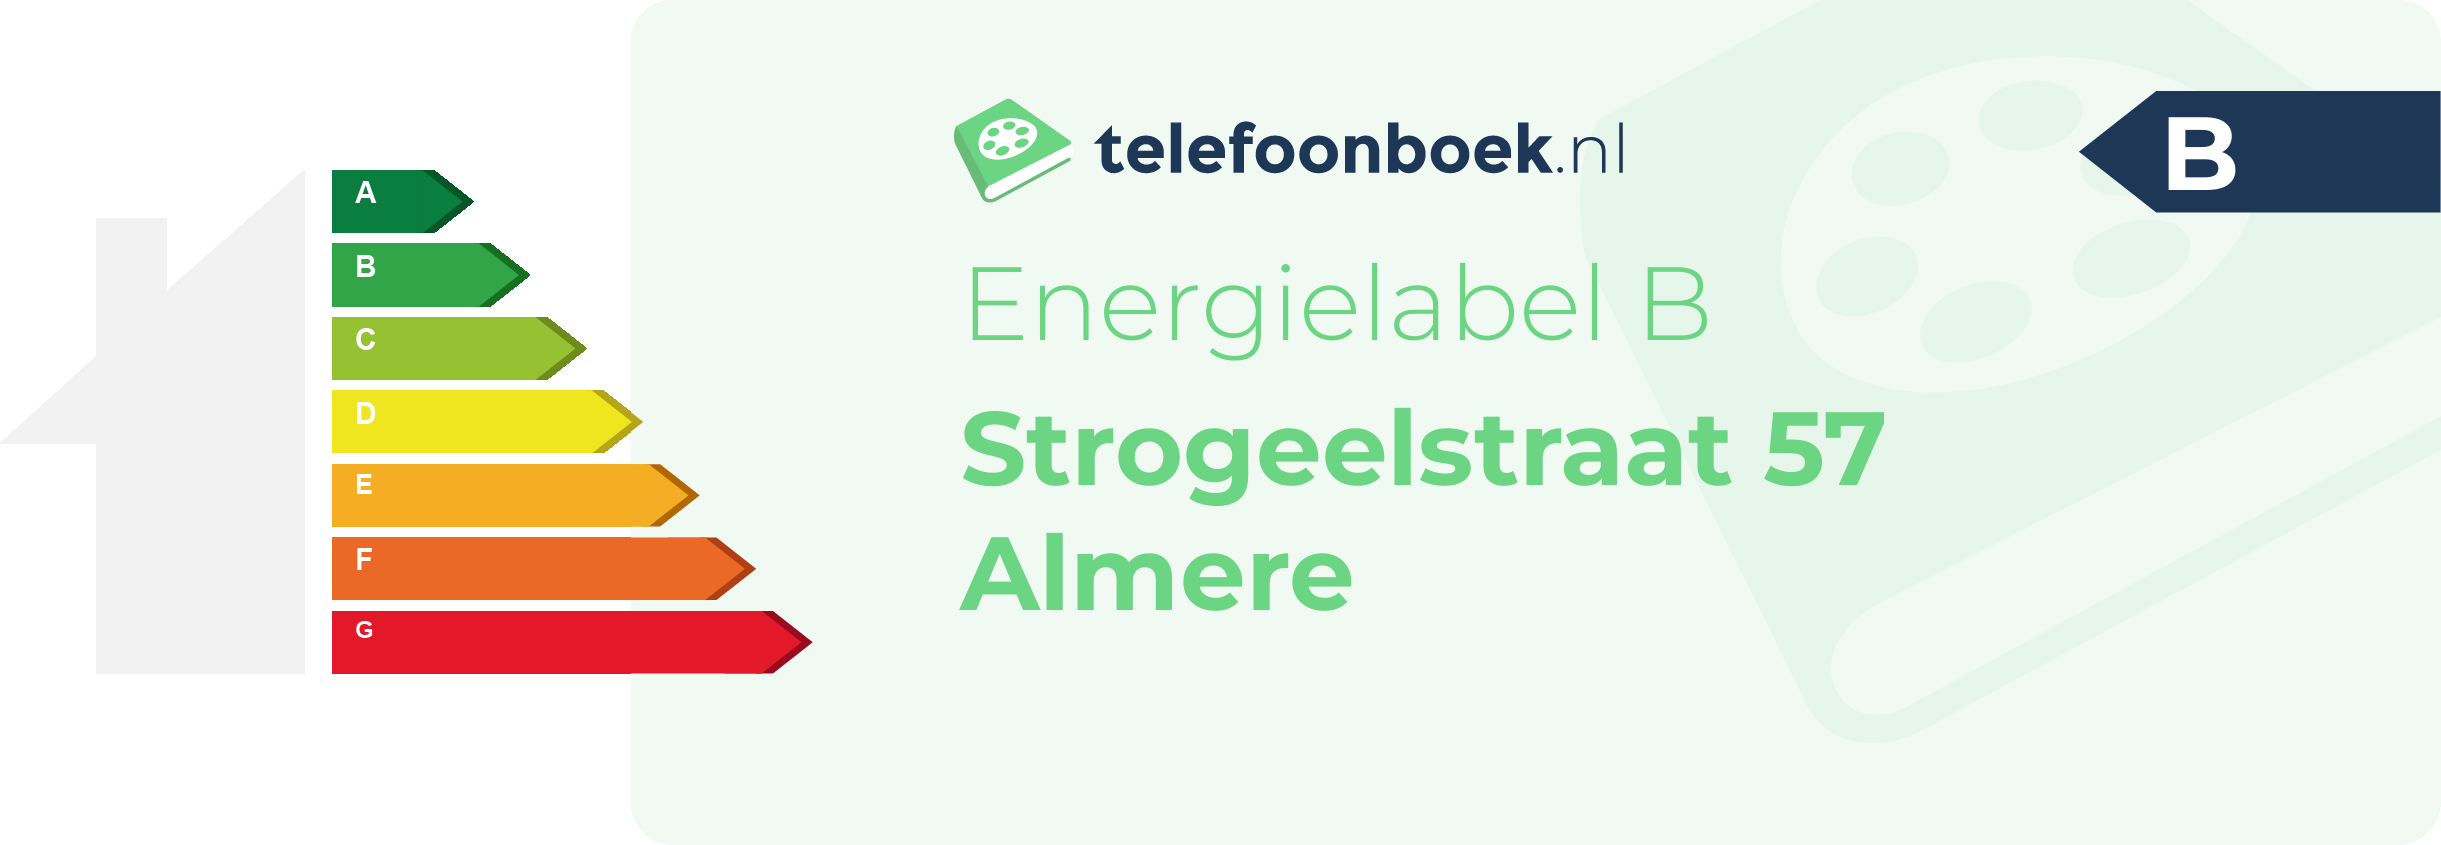 Energielabel Strogeelstraat 57 Almere